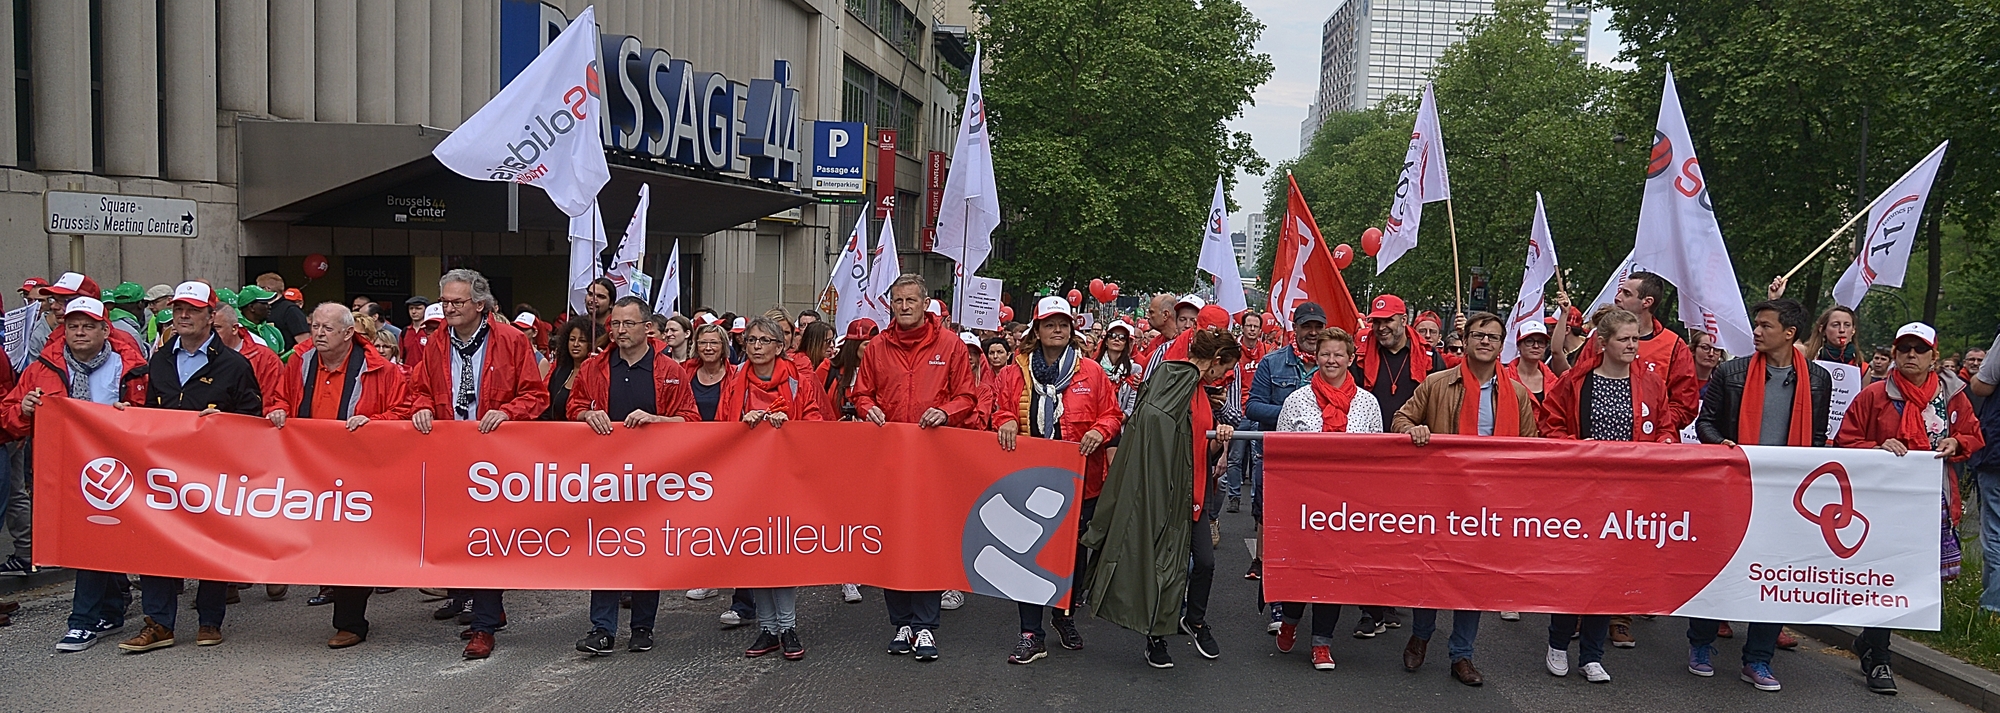 Manifestation in Brussels.